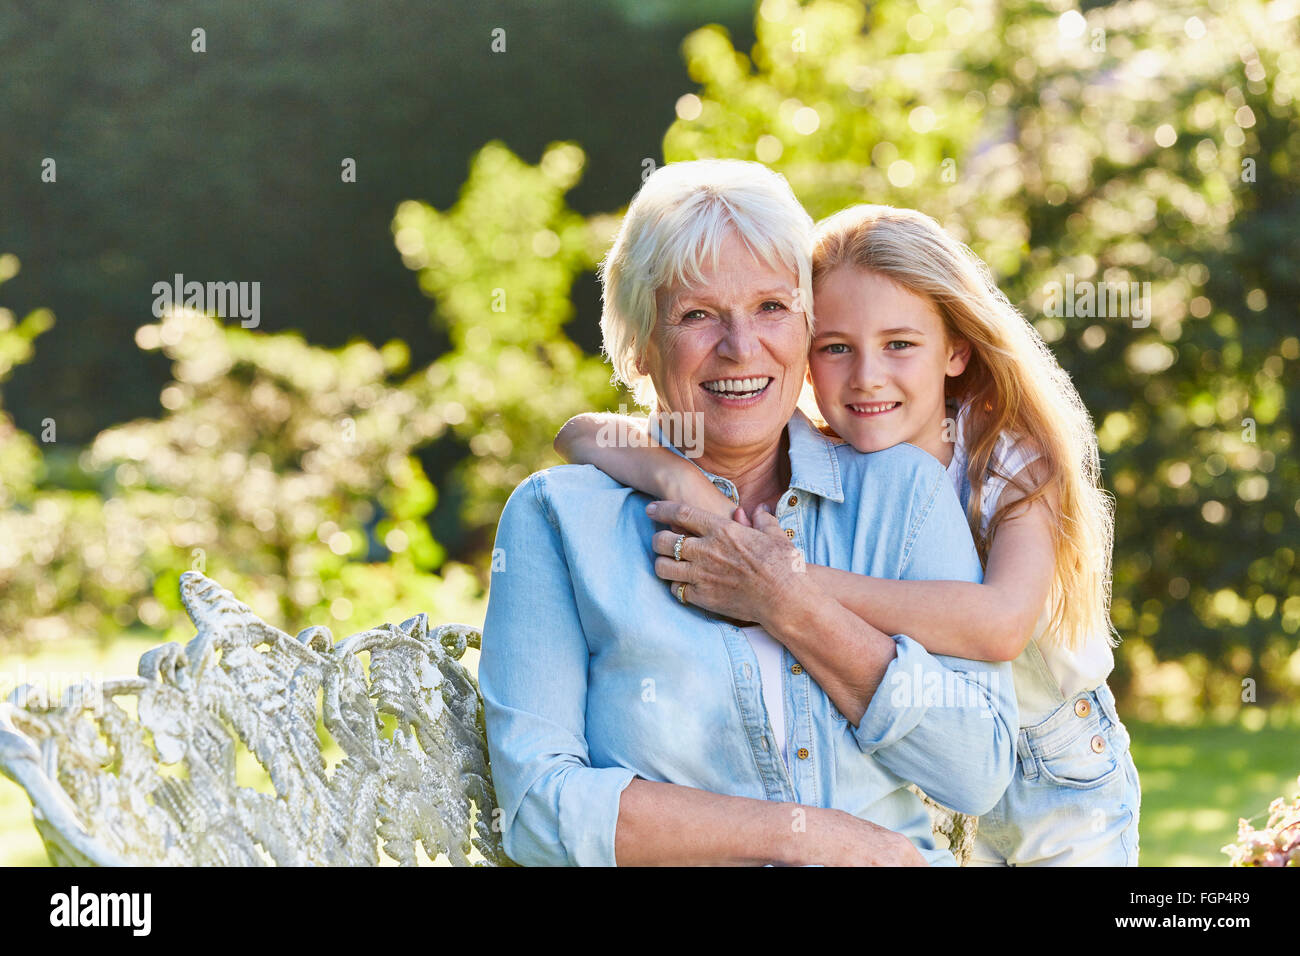 Portrait smiling grandmother and granddaughter hugging in garden Stock Photo